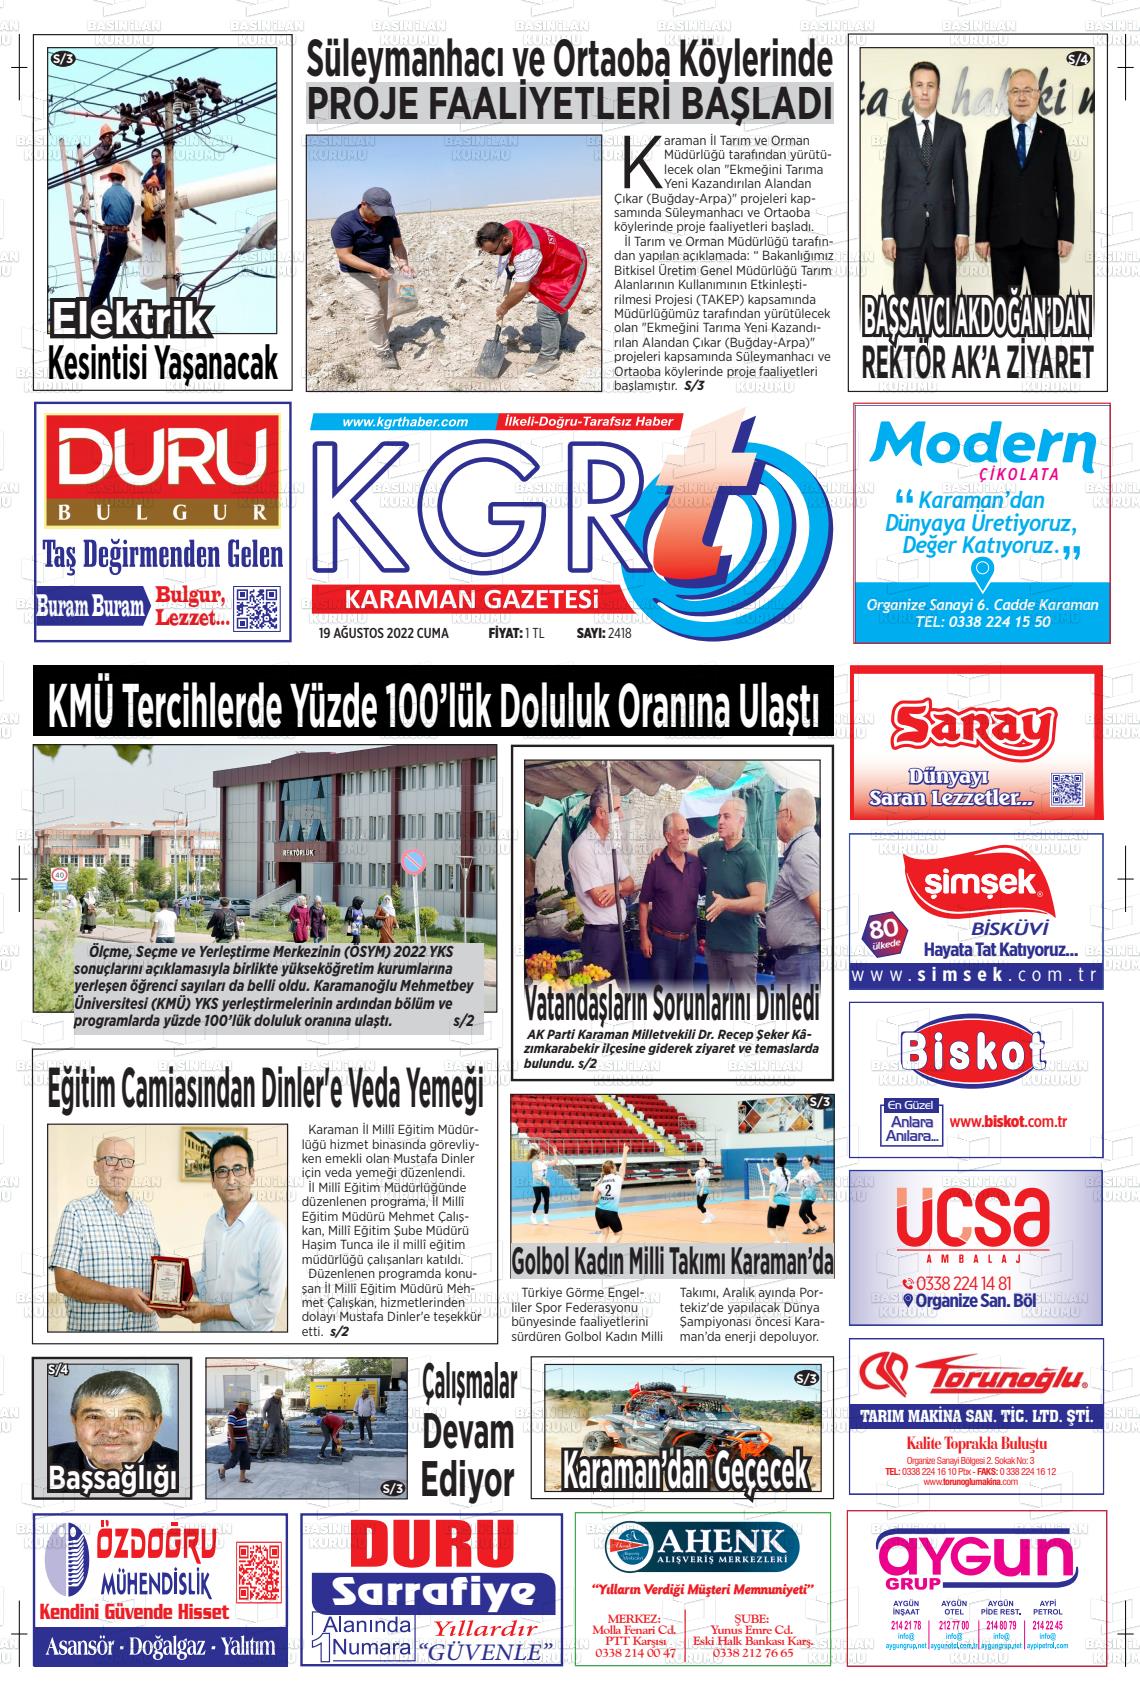 19 Ağustos 2022 Kgrt Karaman Gazete Manşeti